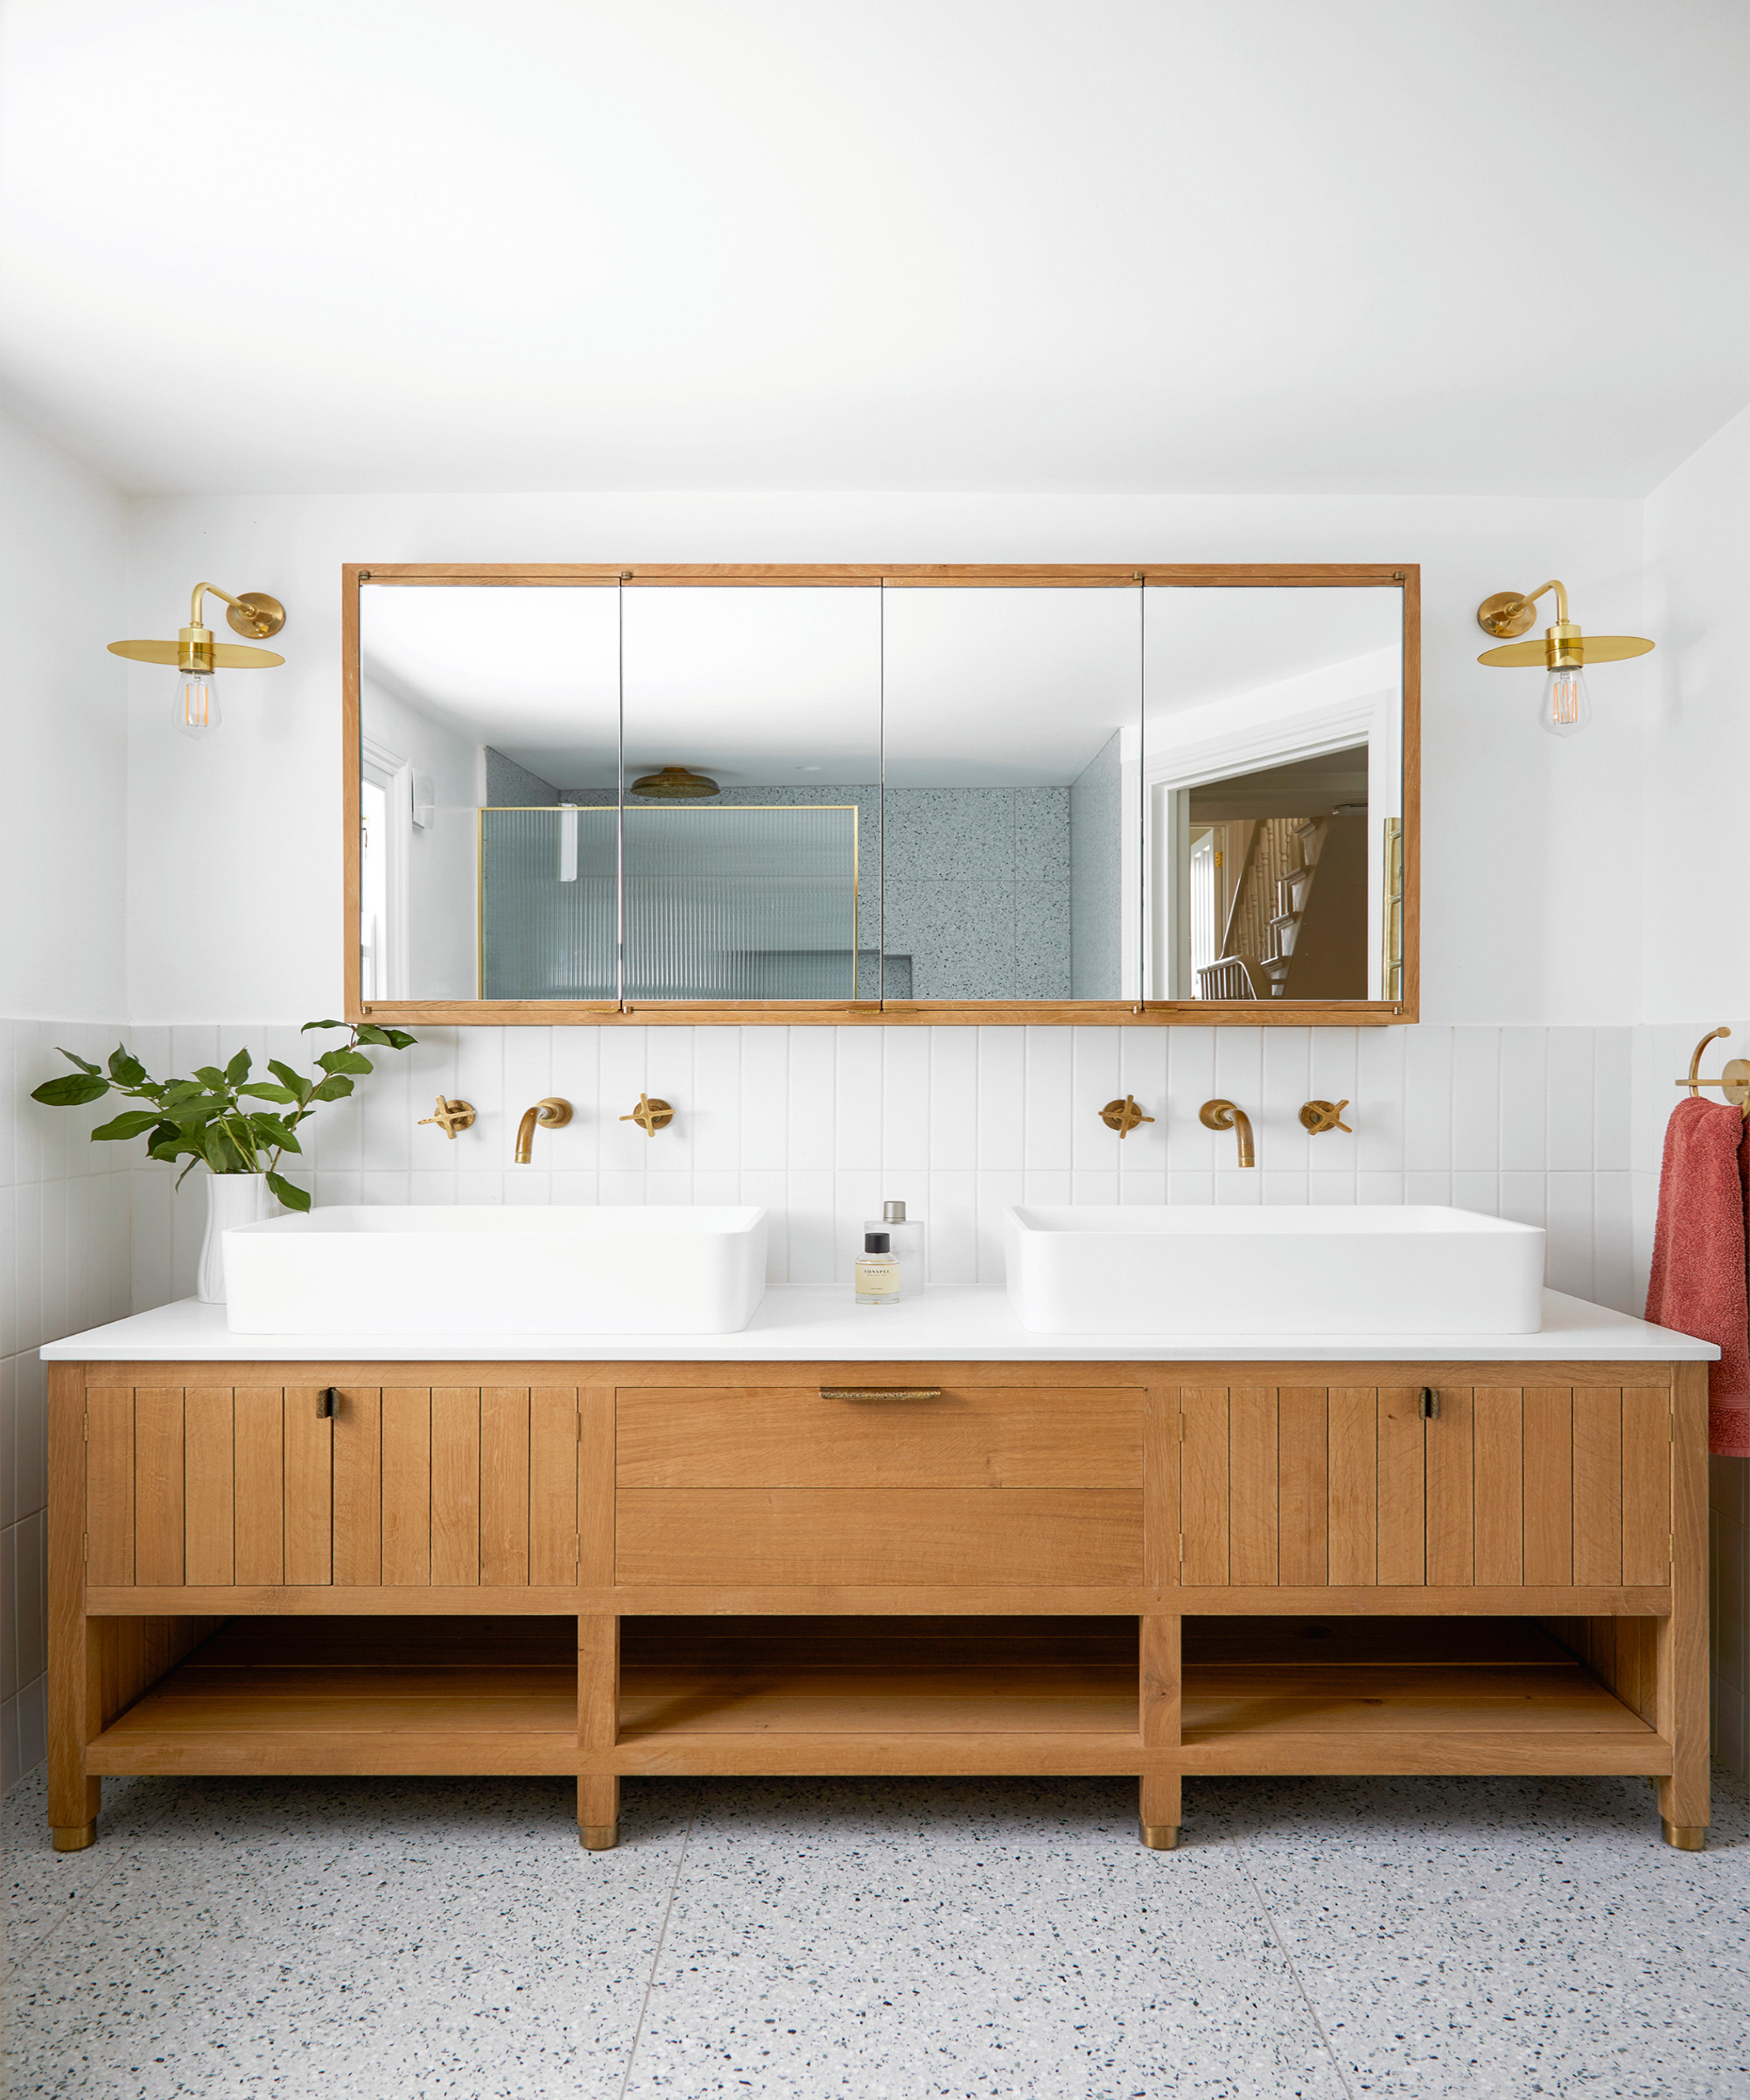 Bathroom mirror ideas – 10 beautiful designs to suit any bath shower or powder room